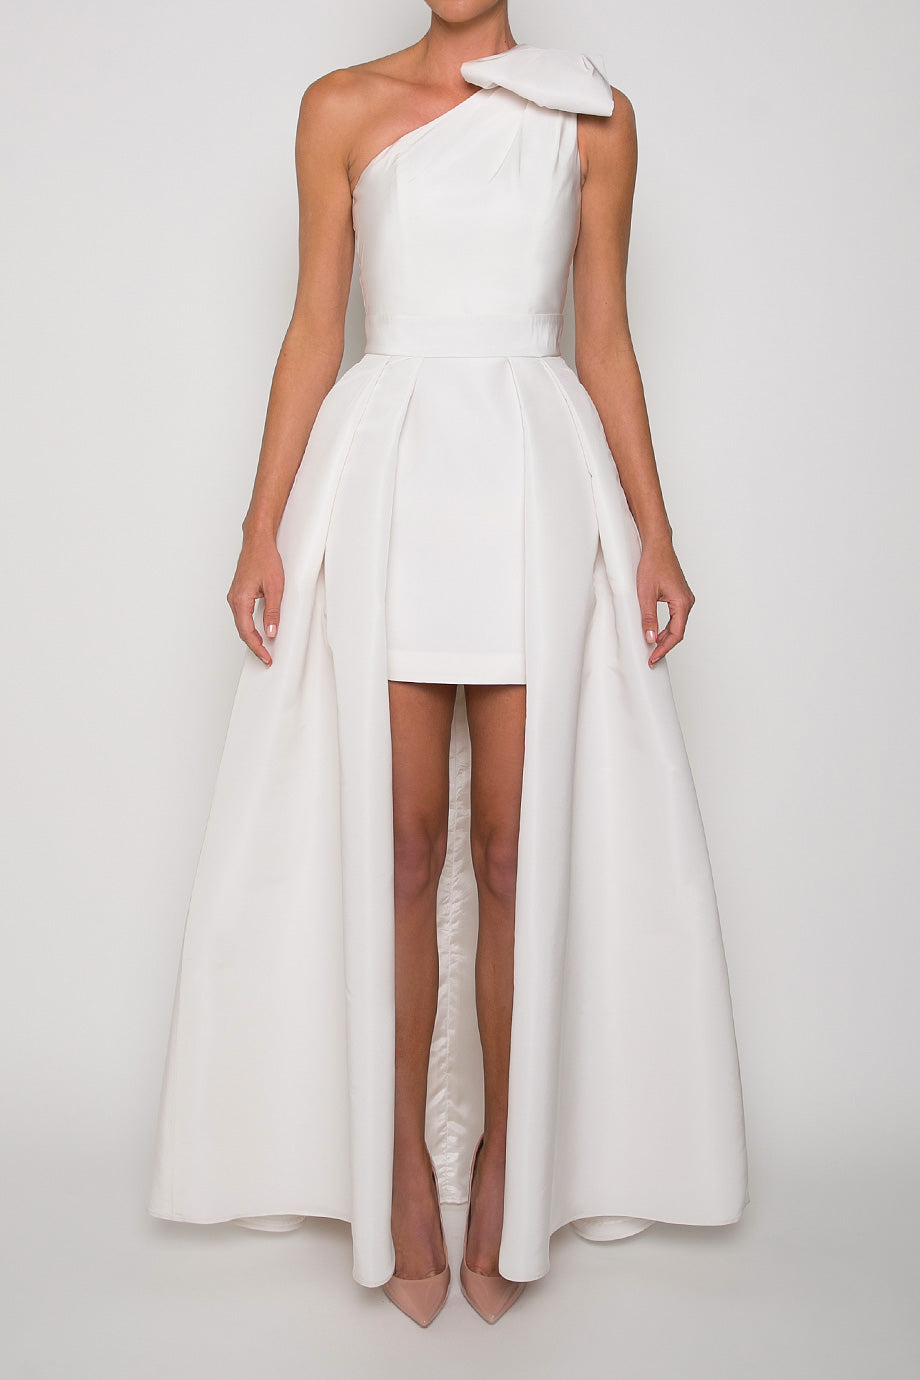 Alexia Maria Blair Wedding Dress with overskirt